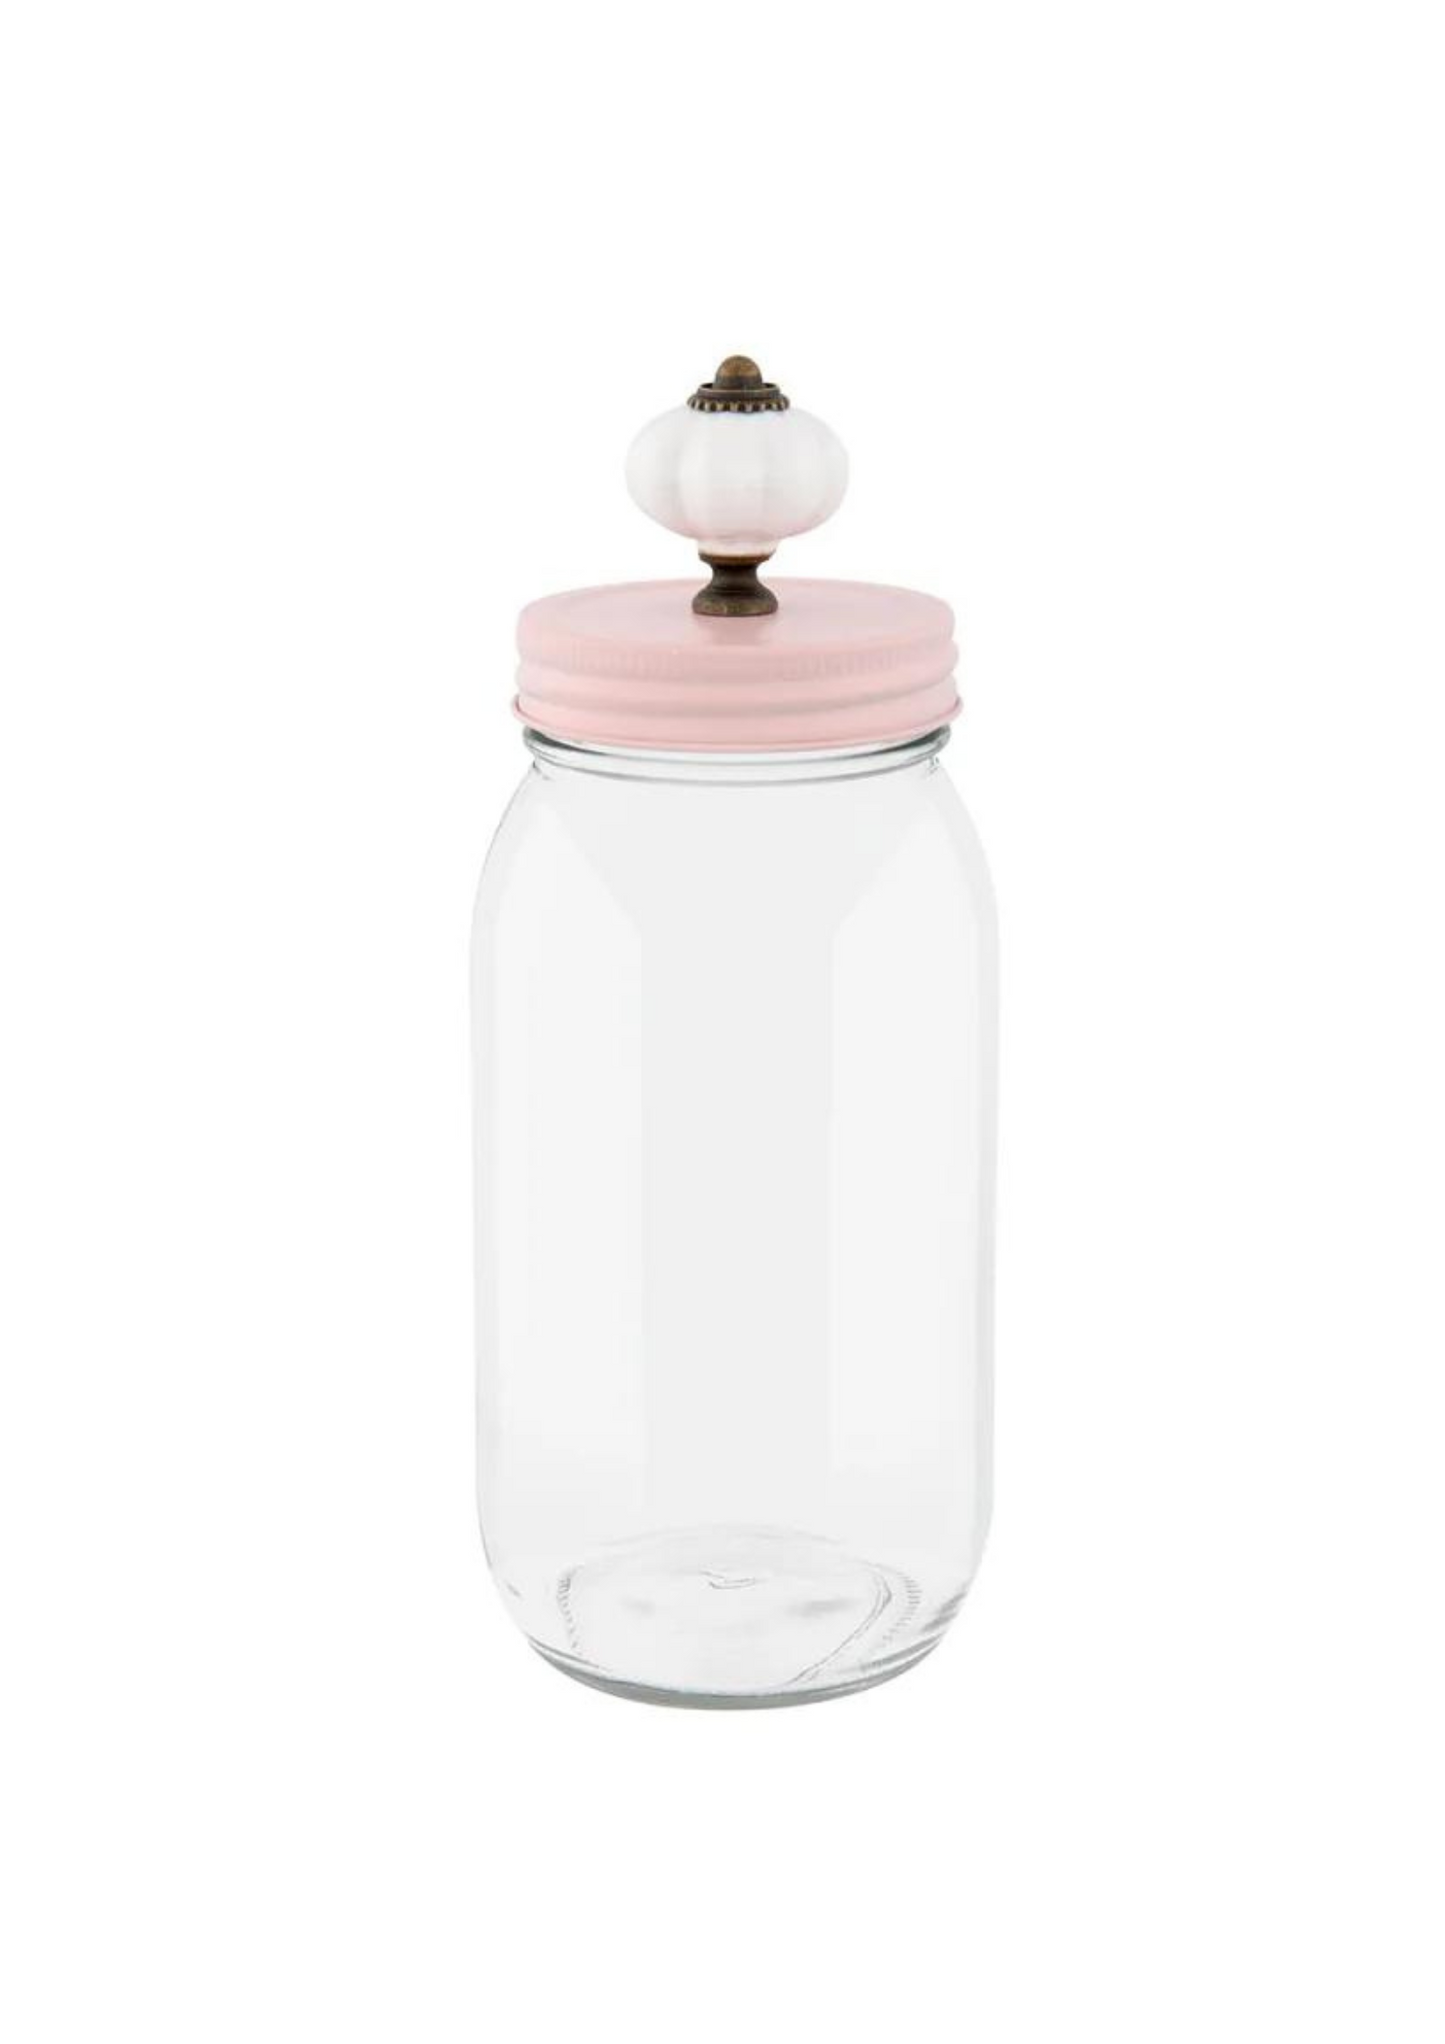 Jar with pink lid